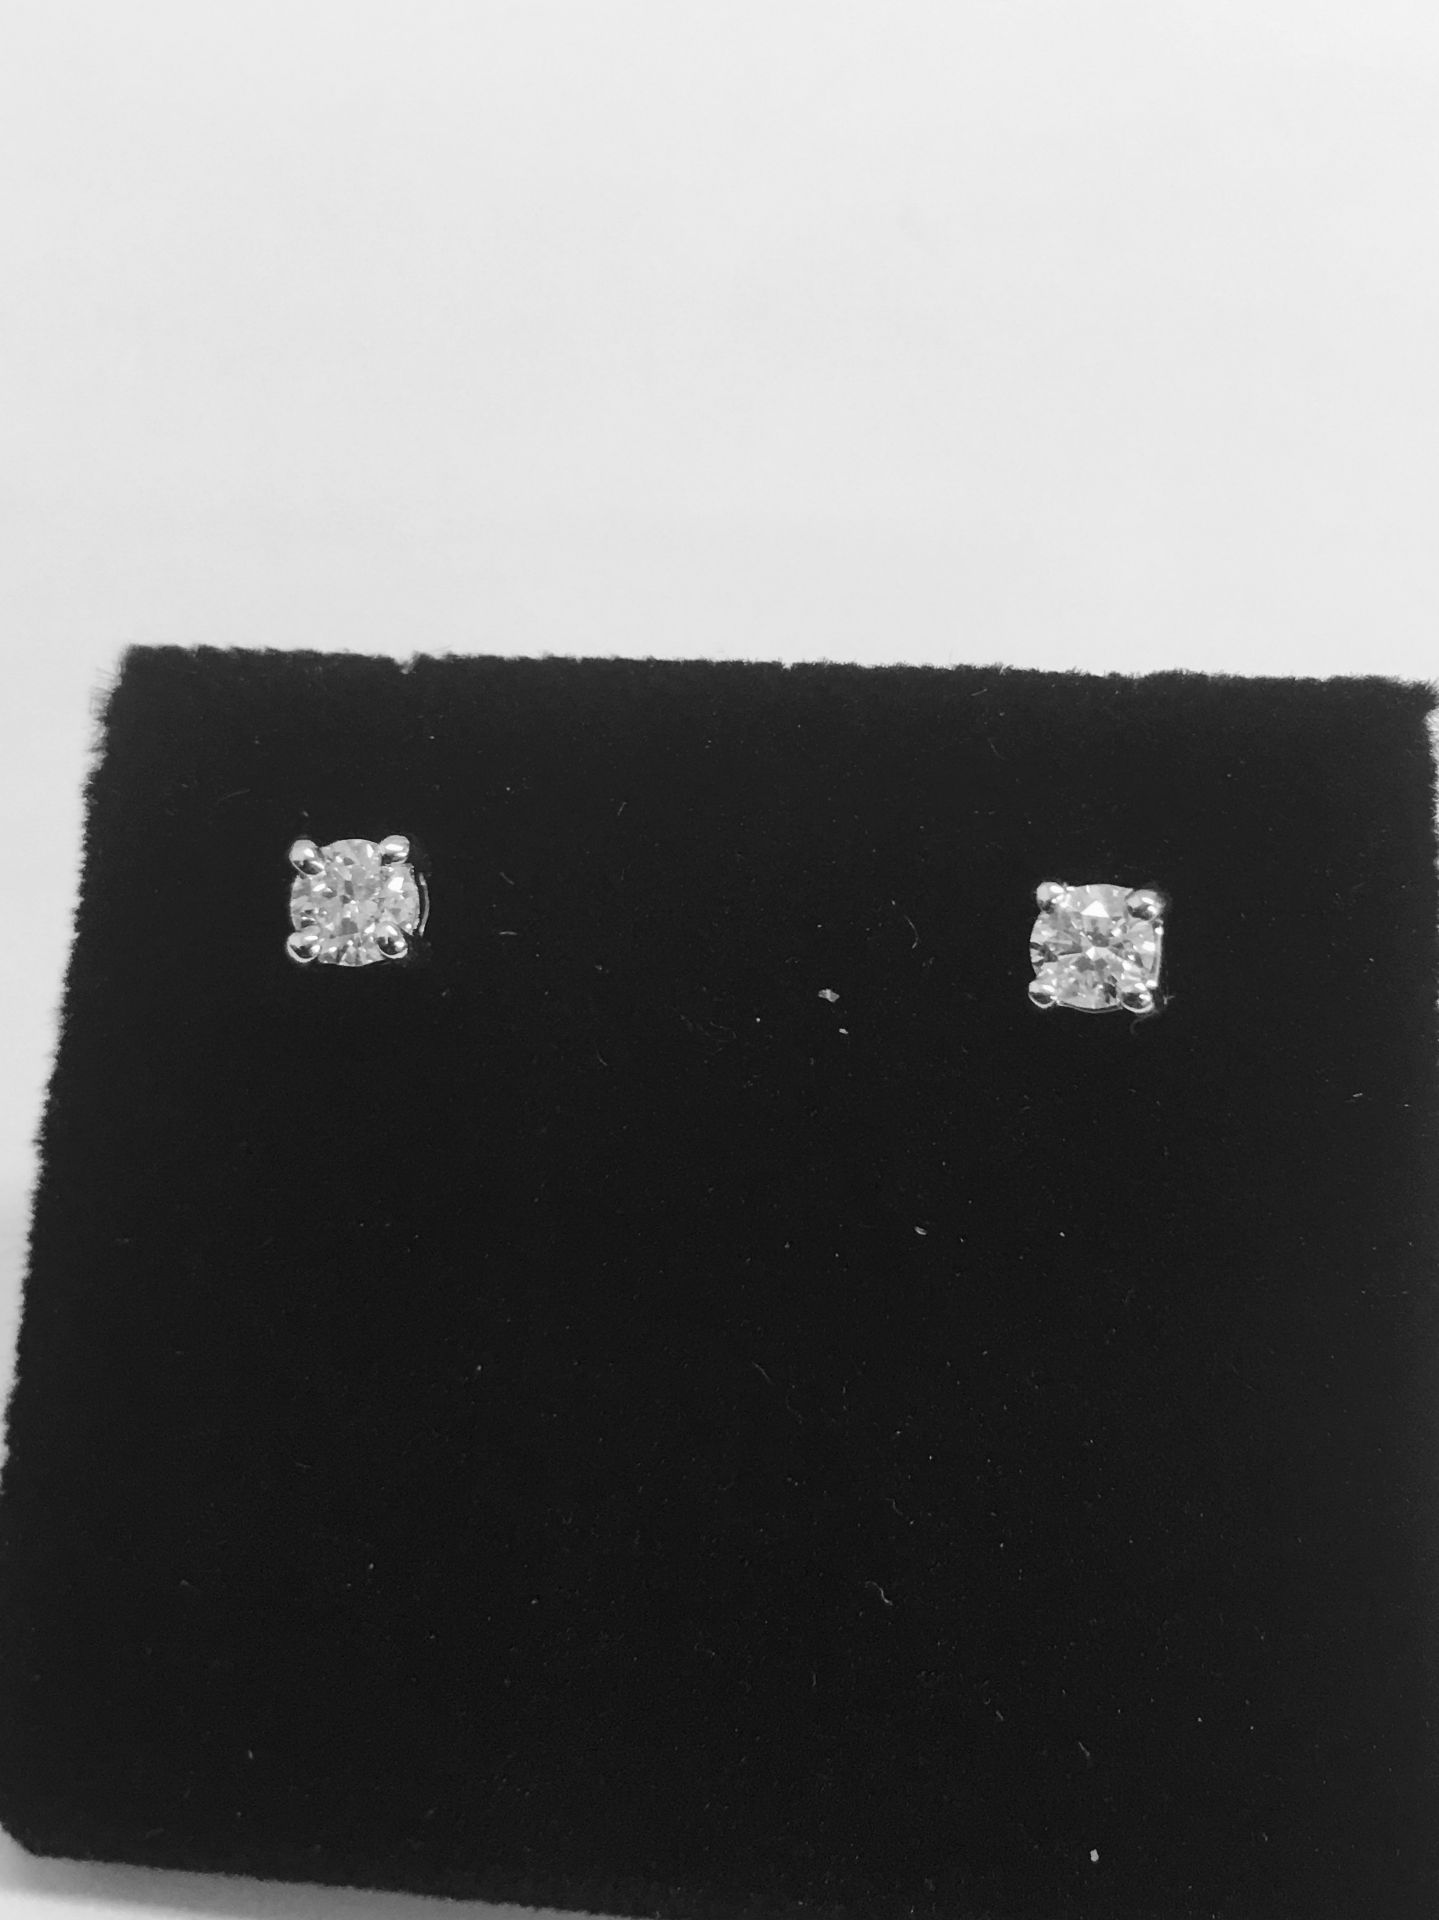 0.30ct diamond solitaire stud earrings set in platinum 950. Brilliant cut diamonds I colour, si2 - Image 2 of 4